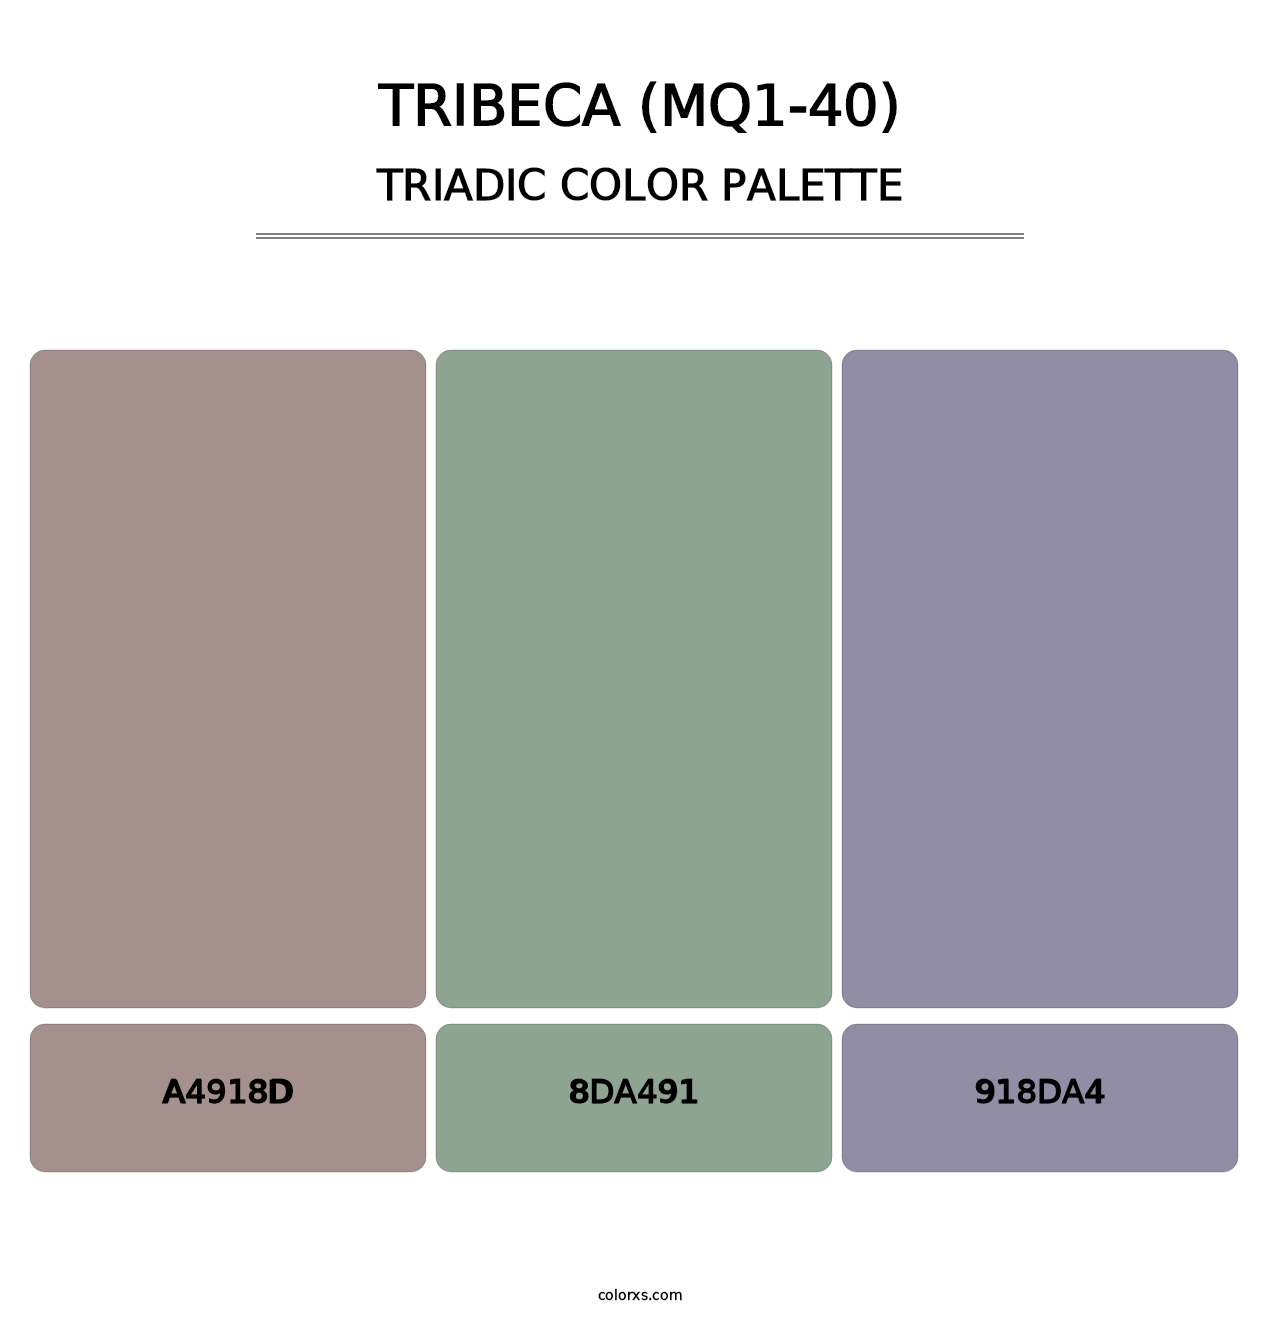 Tribeca (MQ1-40) - Triadic Color Palette